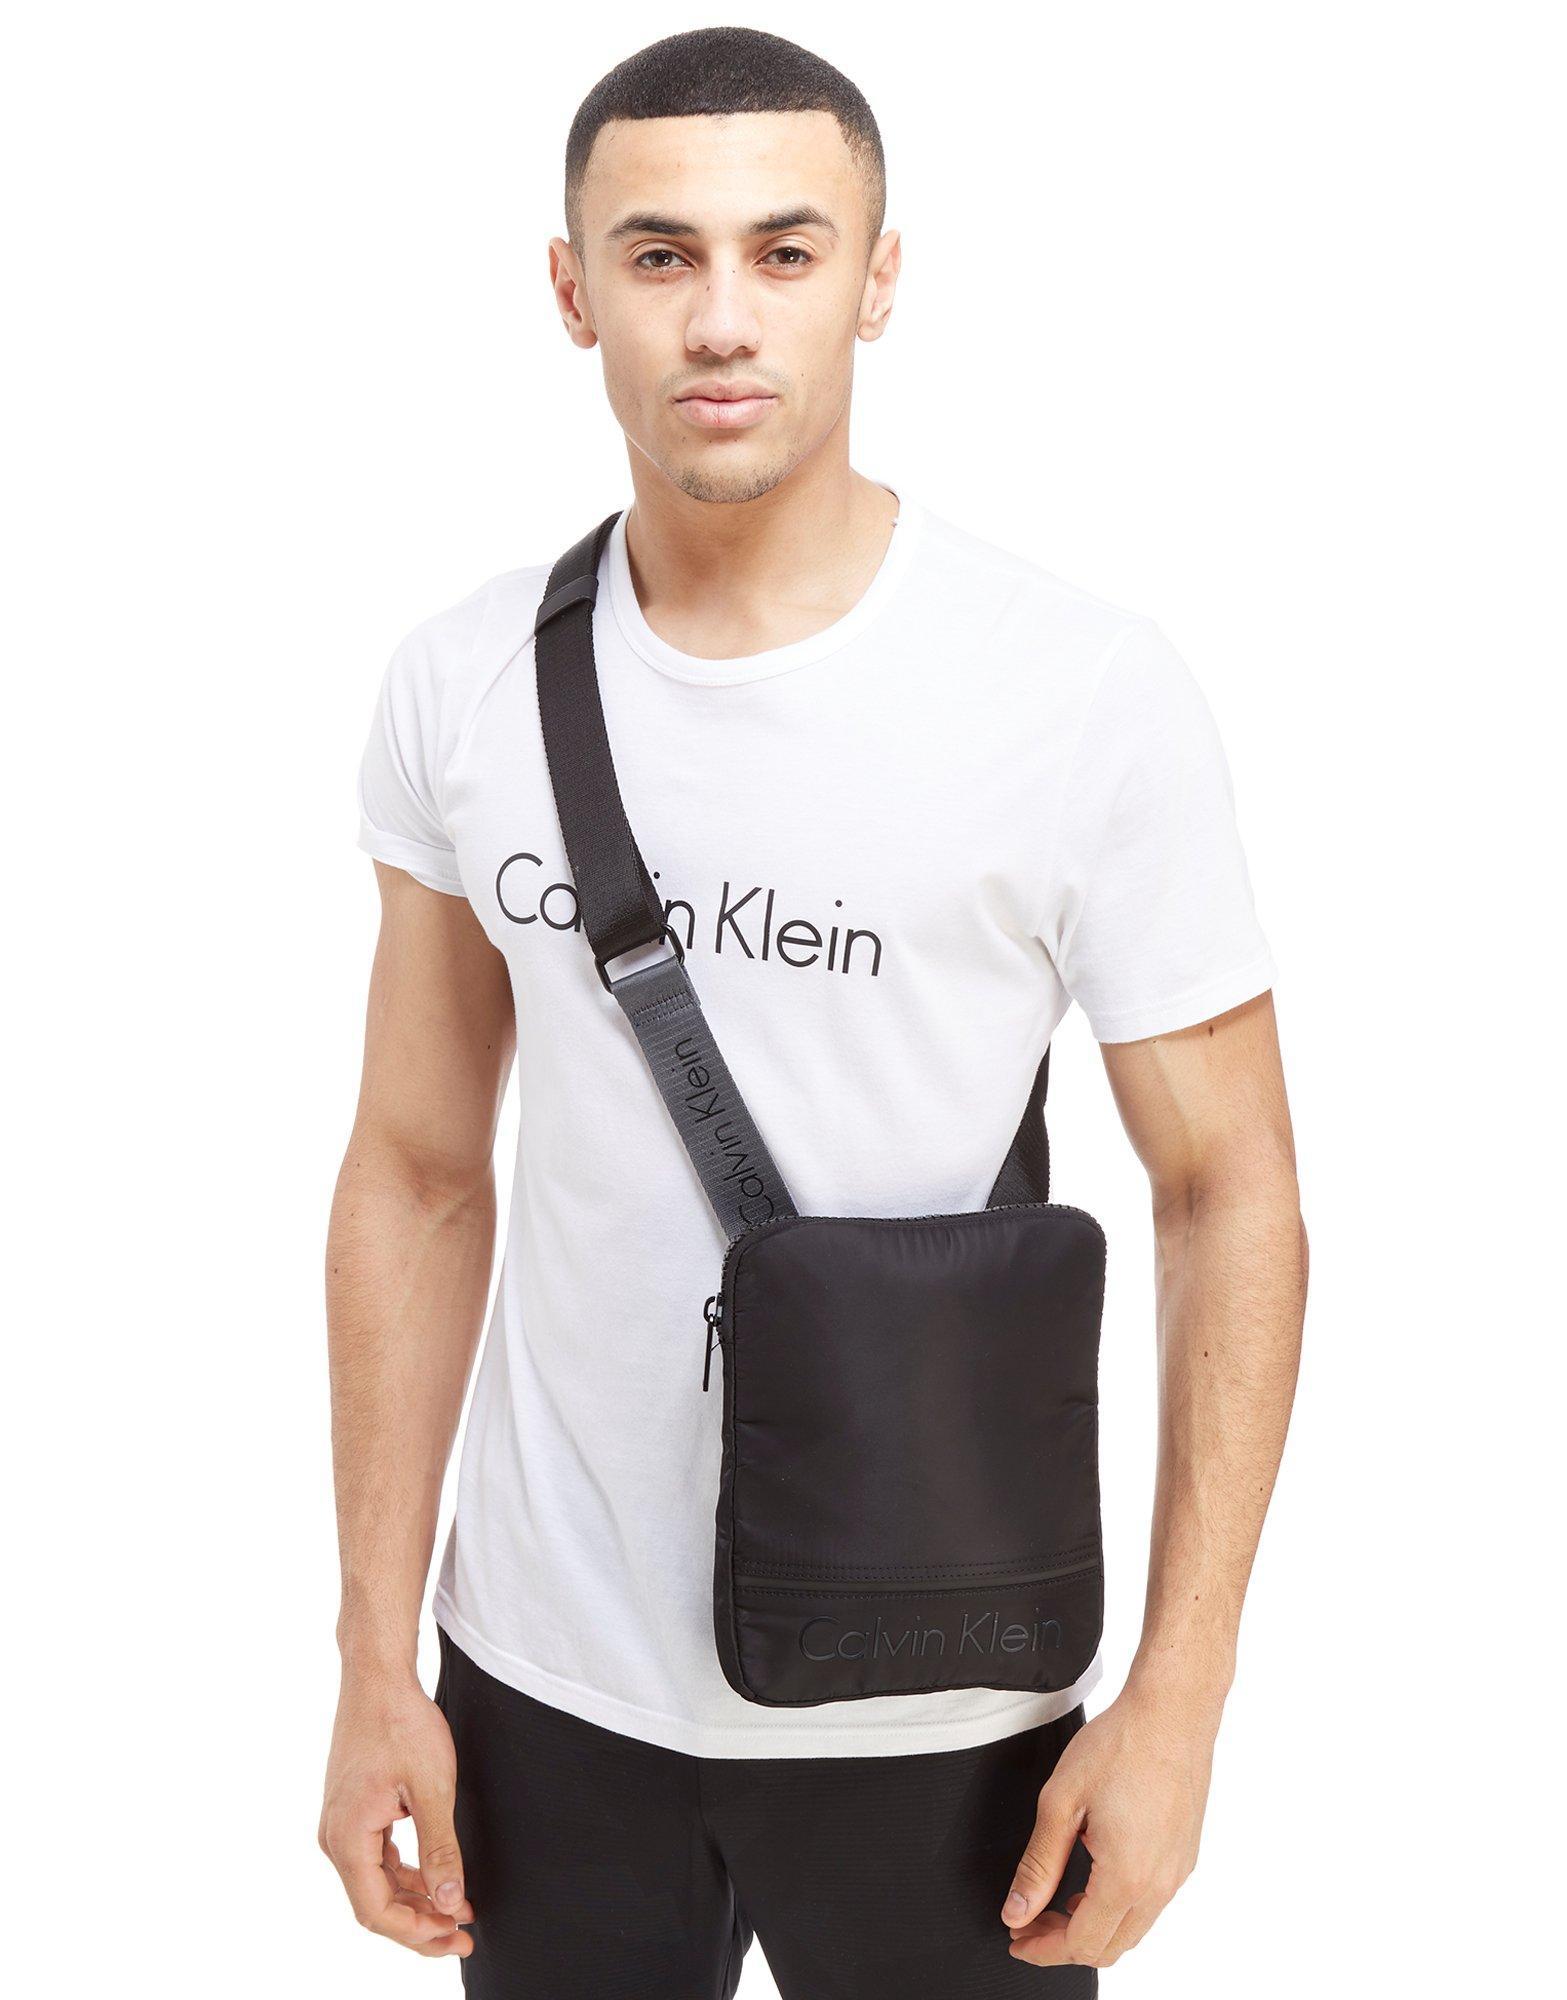 Calvin Klein Flat Cross Body Bag Discount, 52% OFF | fantova.net